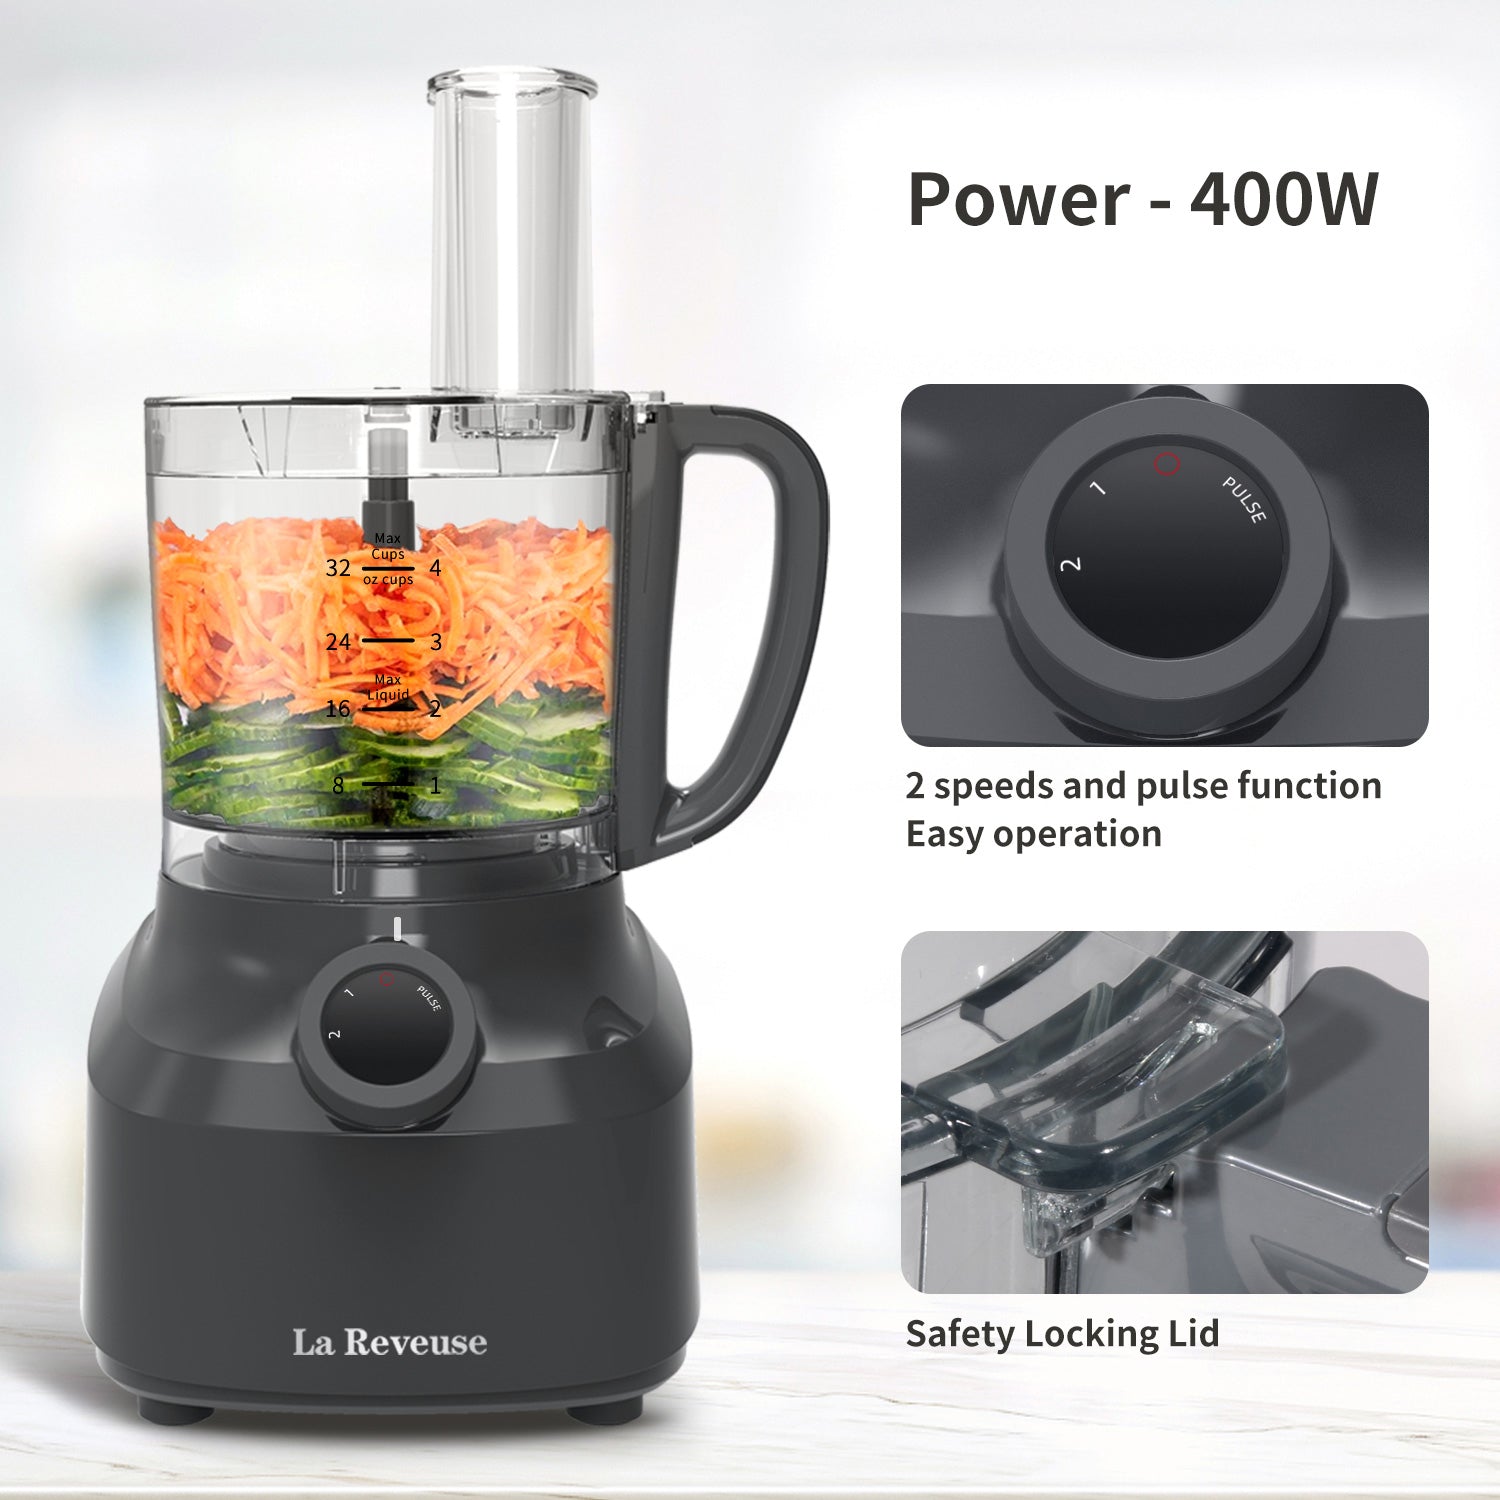 La Reveuse Electric Mini Food Processor with 200 Watts,2-Cup Prep